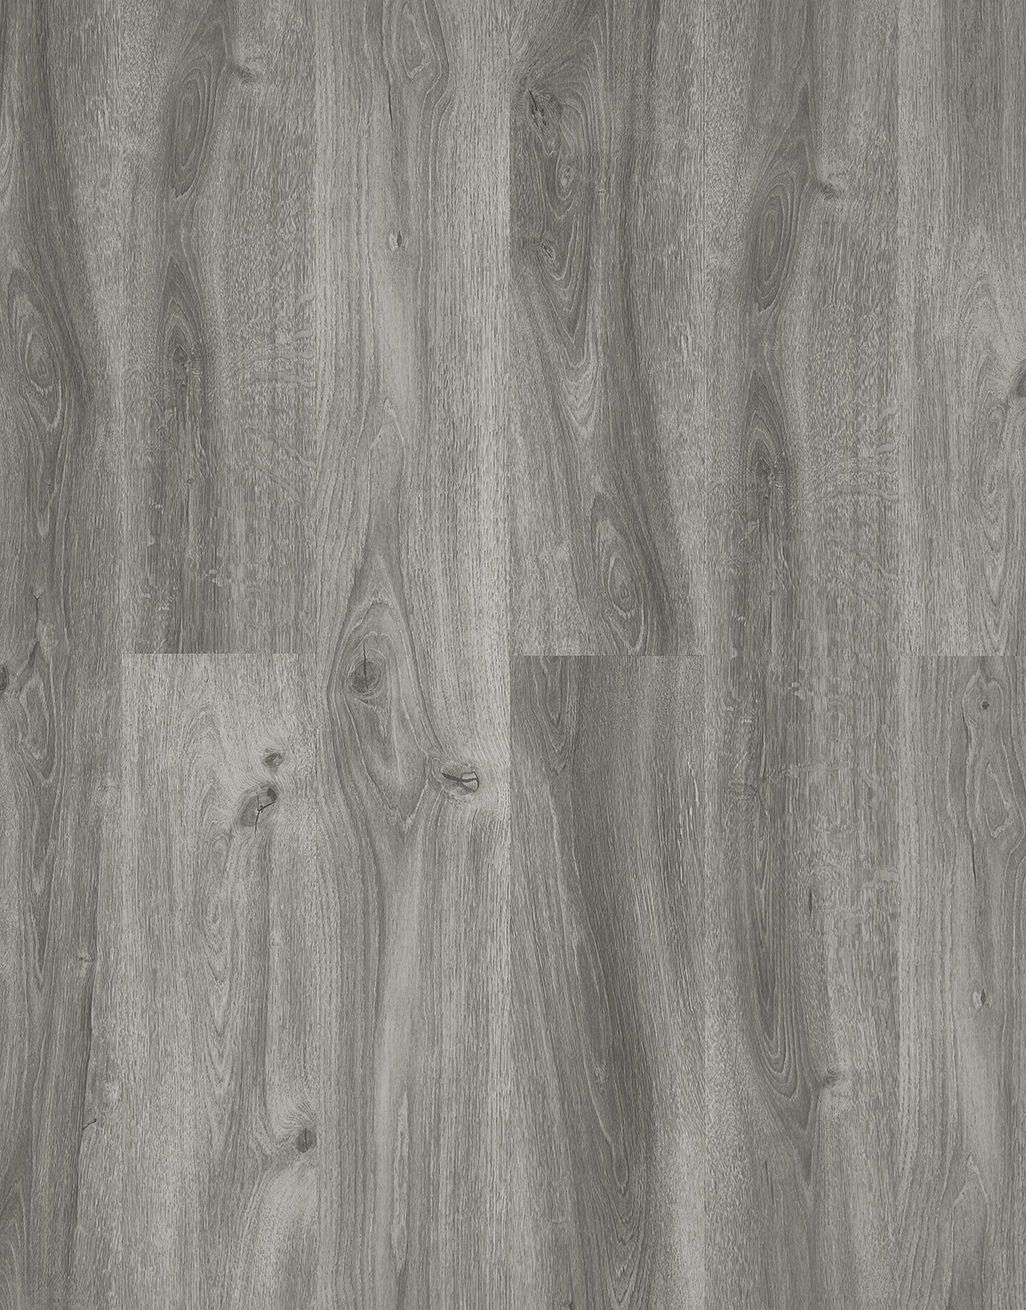 Evocore Essentials Husky Grey Oak, Husky Hardwood Flooring